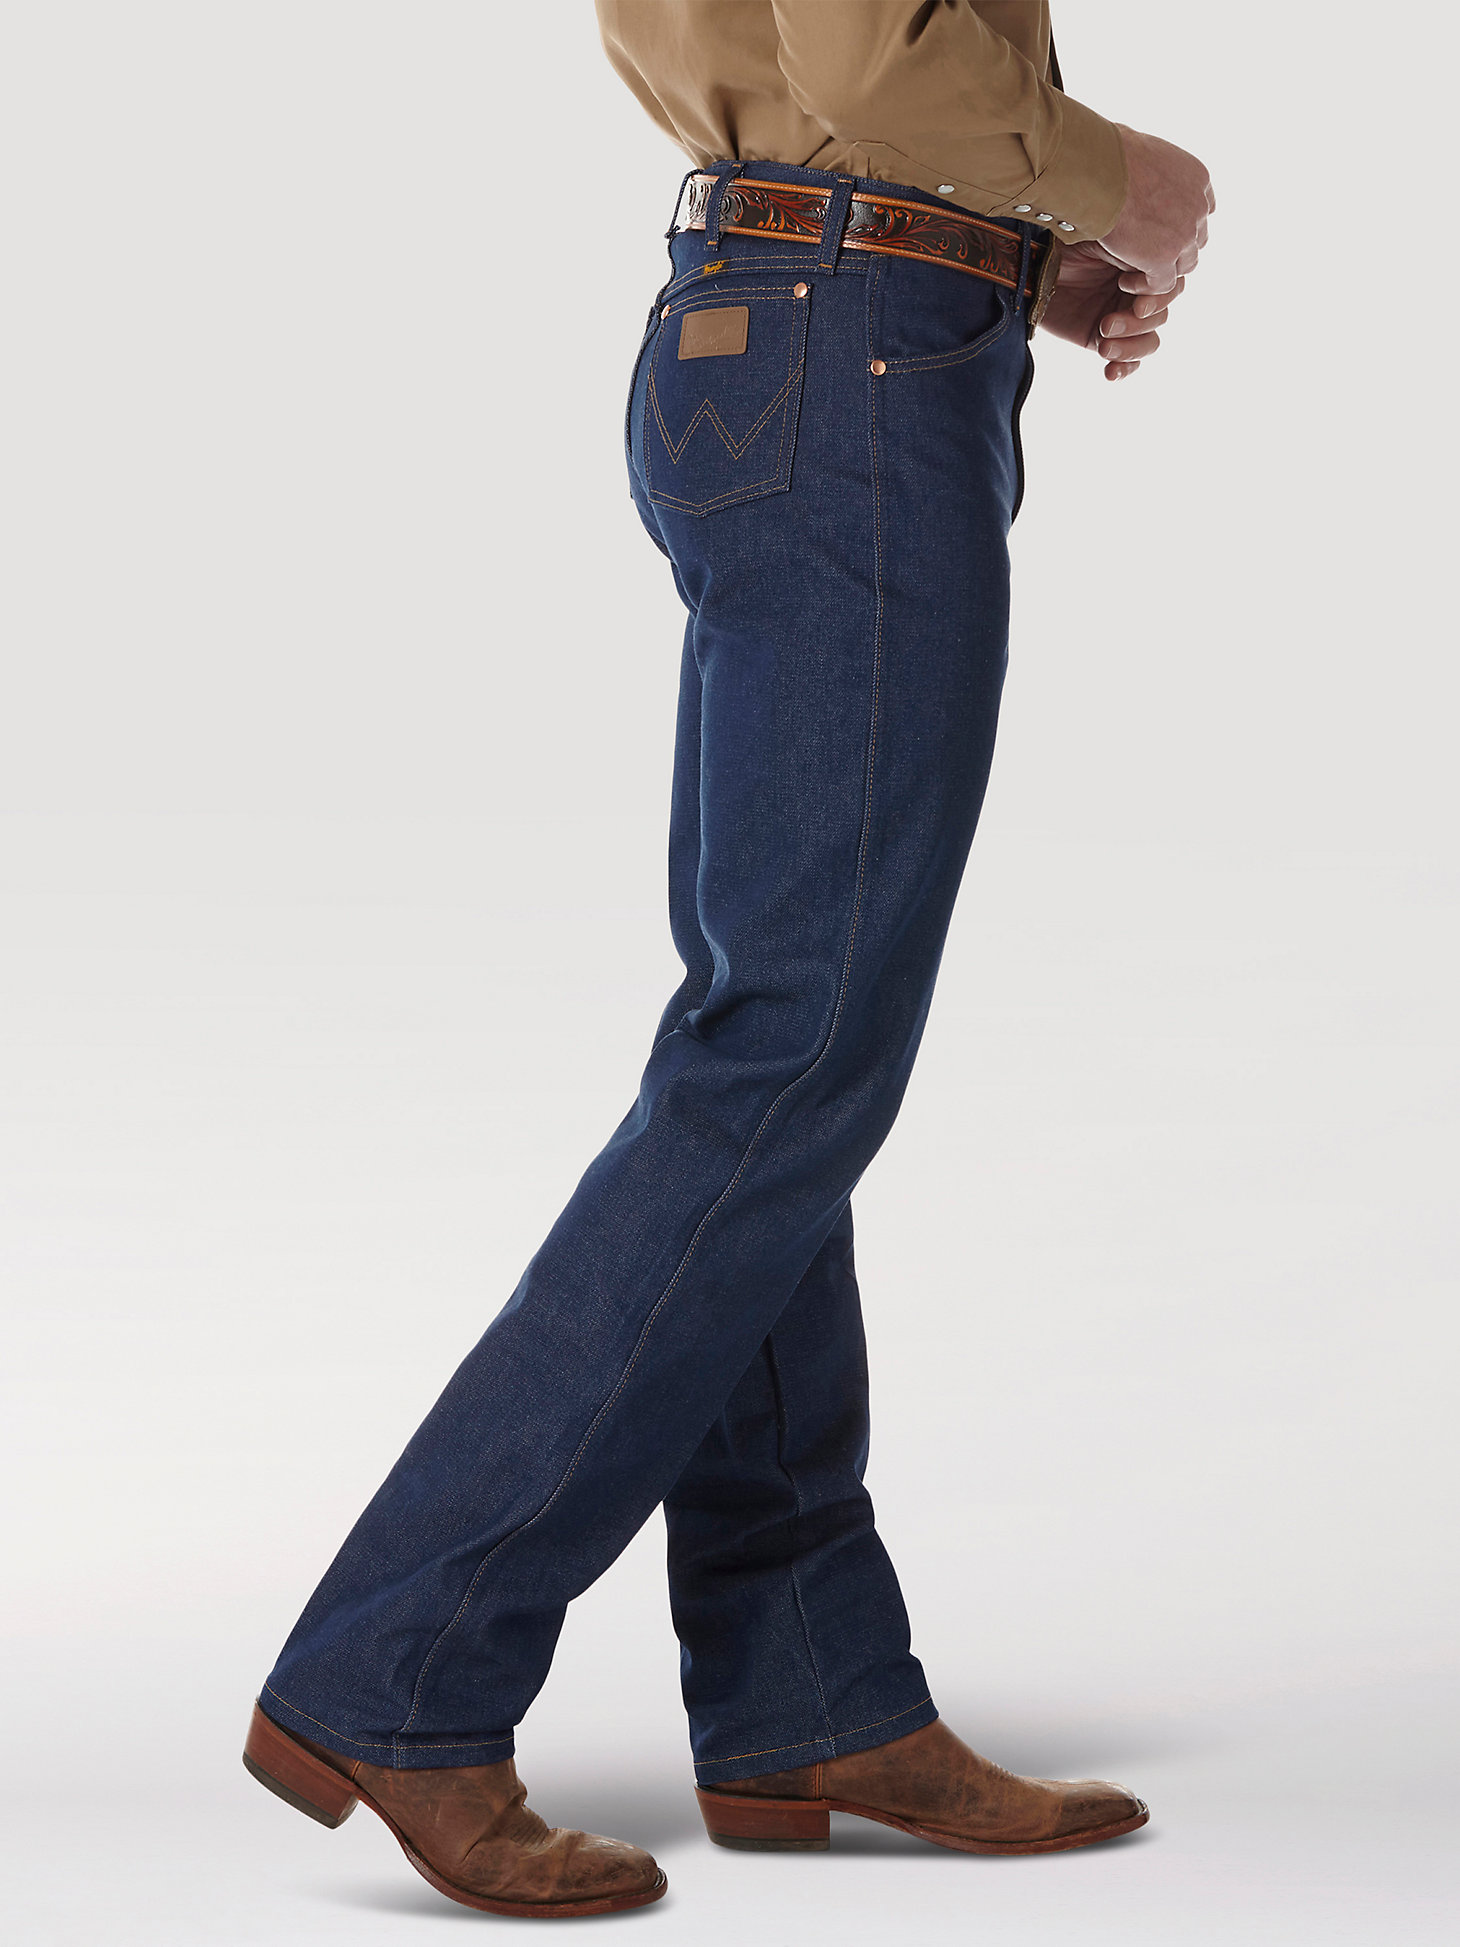 Rigid Wrangler® Cowboy Cut® Original Fit Jean in Rigid Indigo alternative view 1